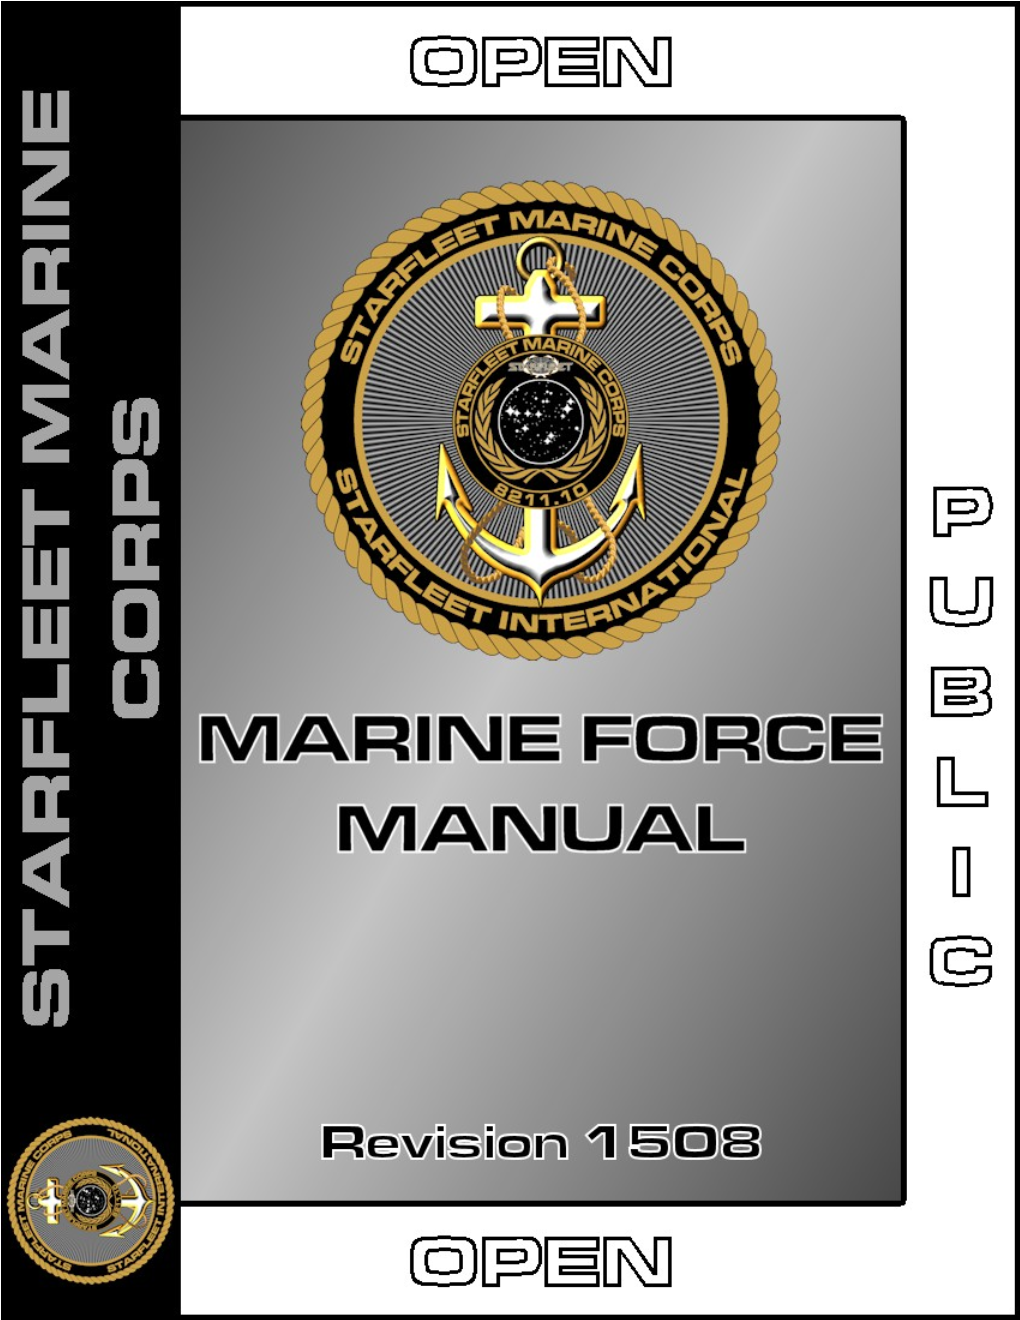 STARFLEET MARINE CORPS MARINE FORCE MANUAL Revision 1508